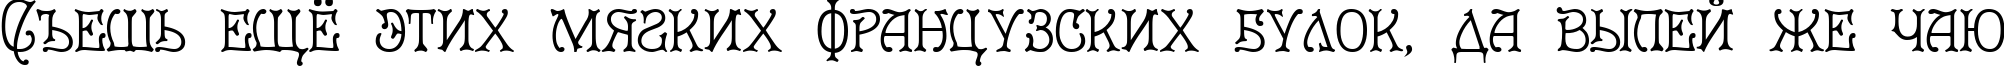 Пример написания шрифтом Le Grand текста на русском